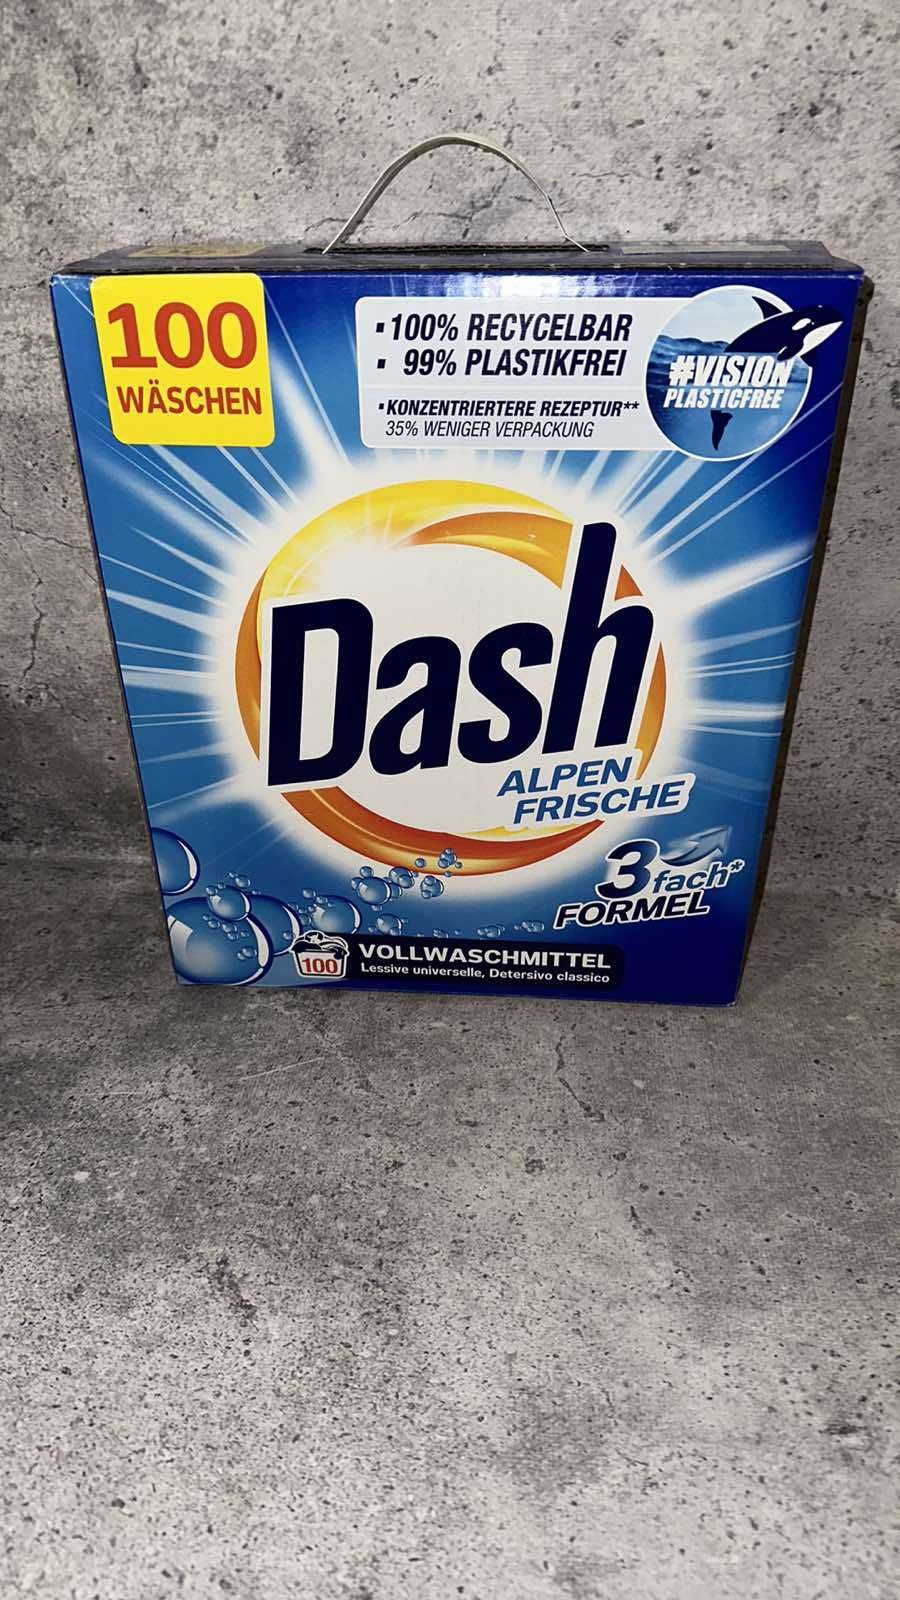 Універсальний пральний порошок Dash Alpen Frische на 100 прань, 6 кг